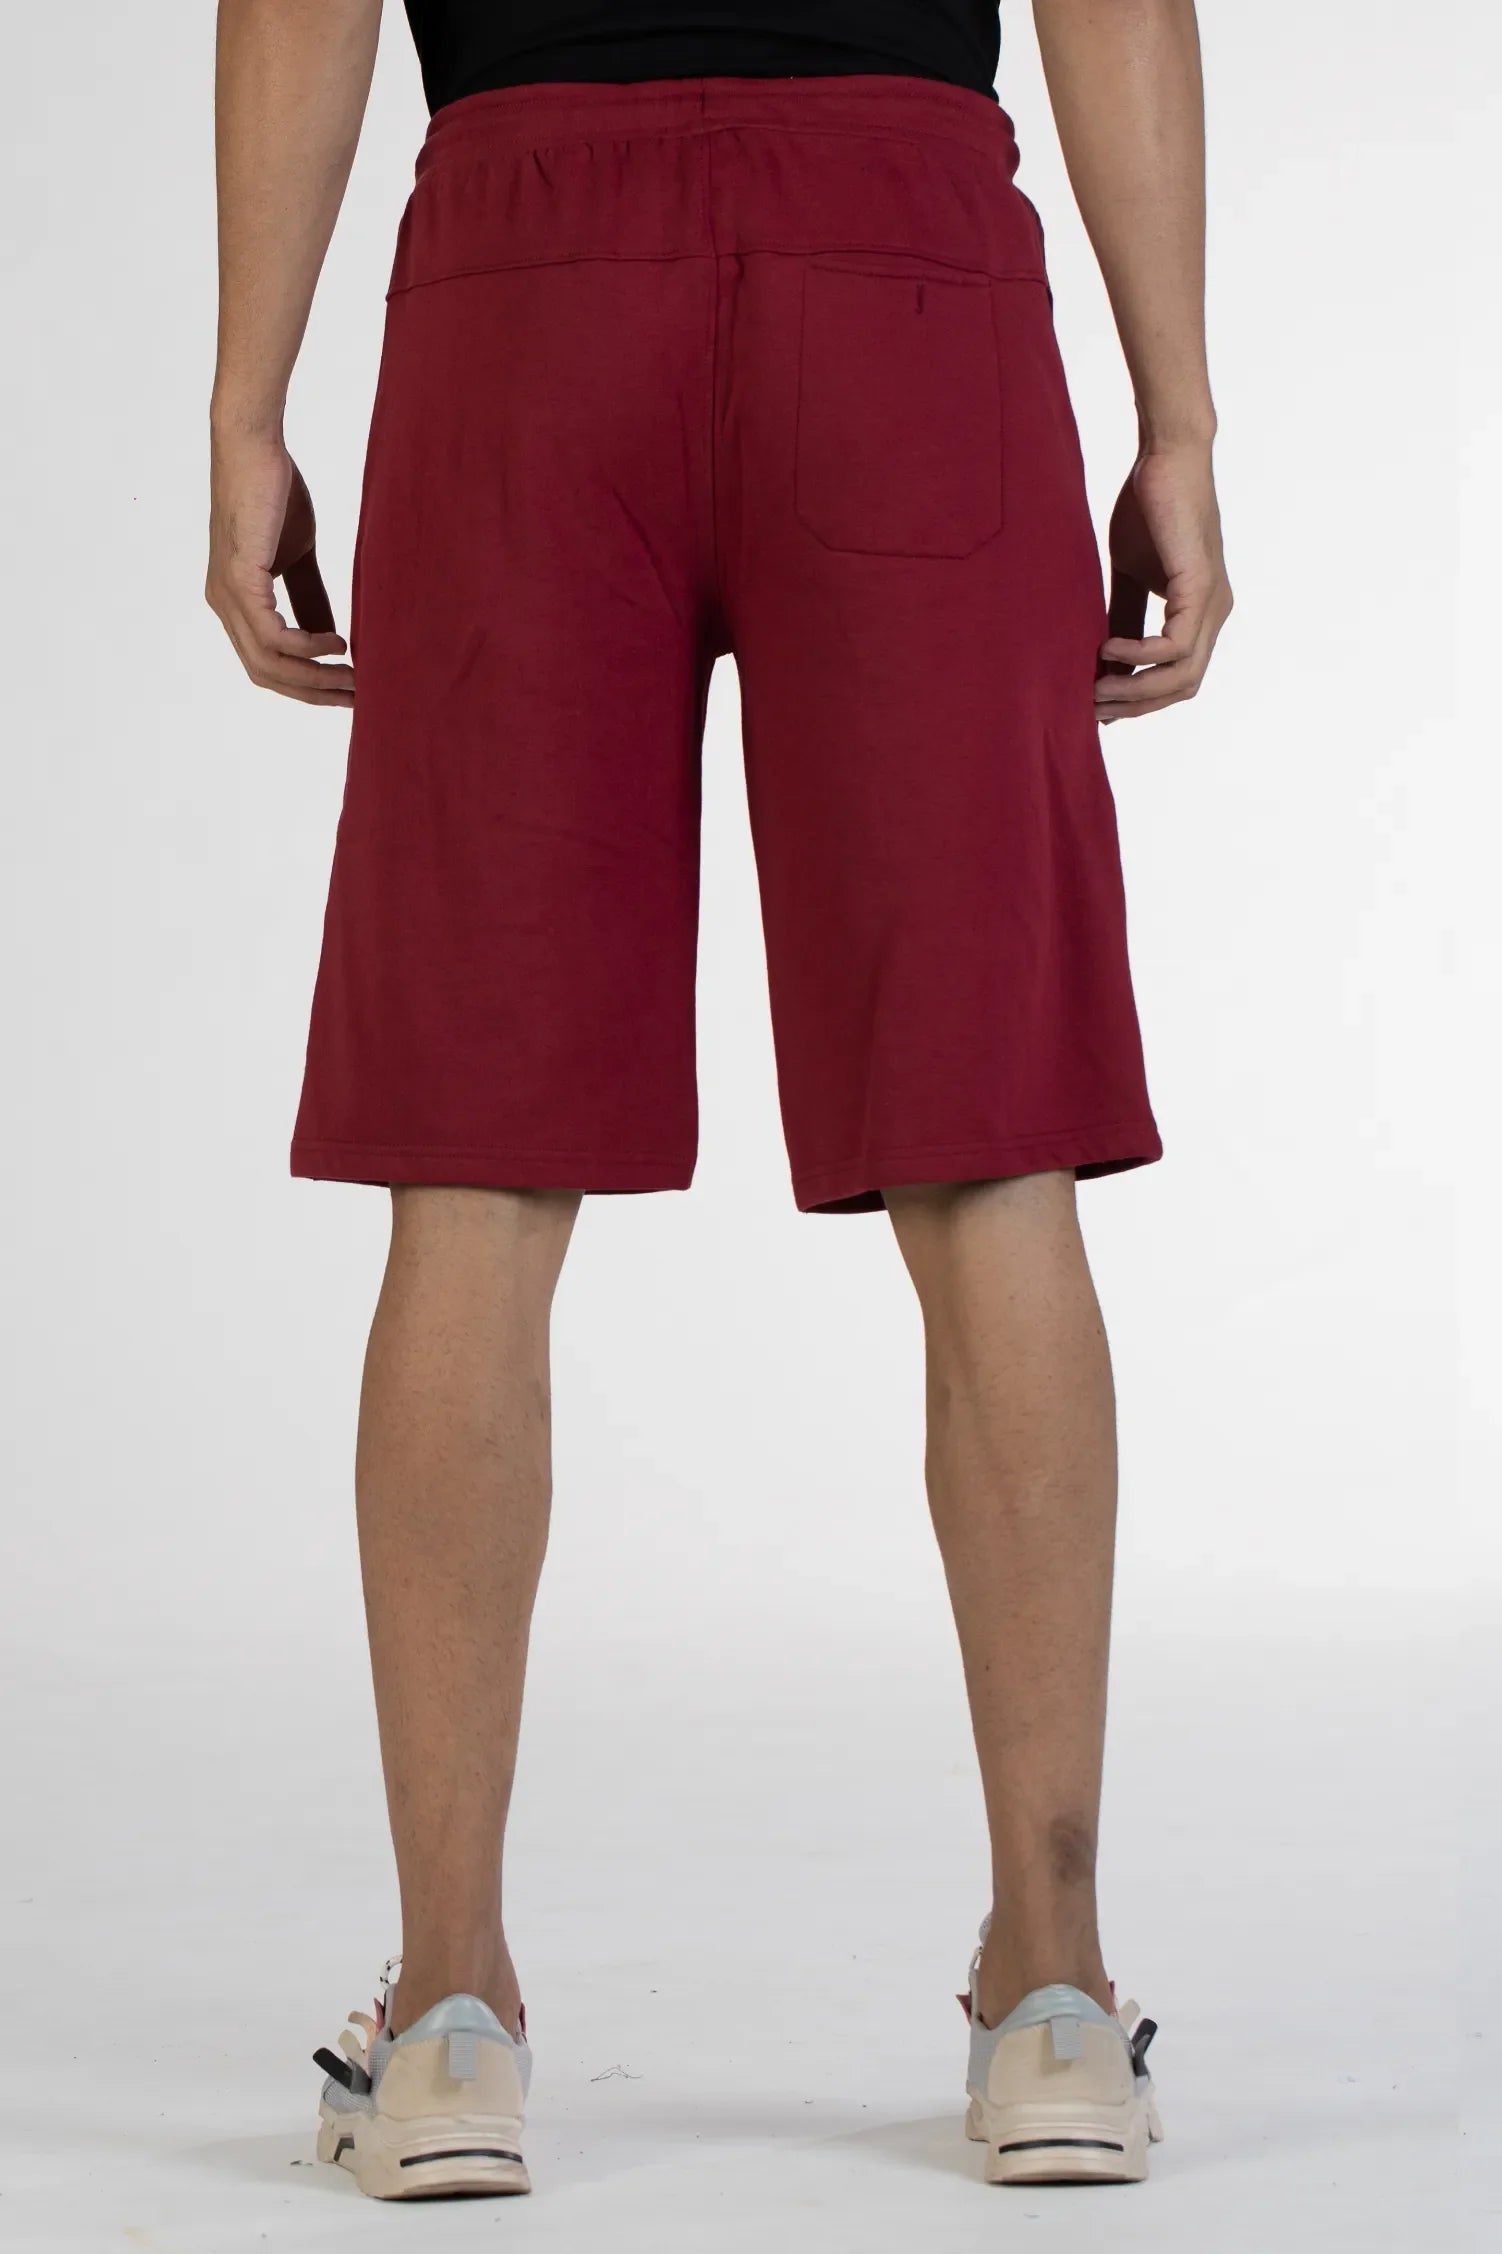 Burgundy solid knit cotton men's shorts